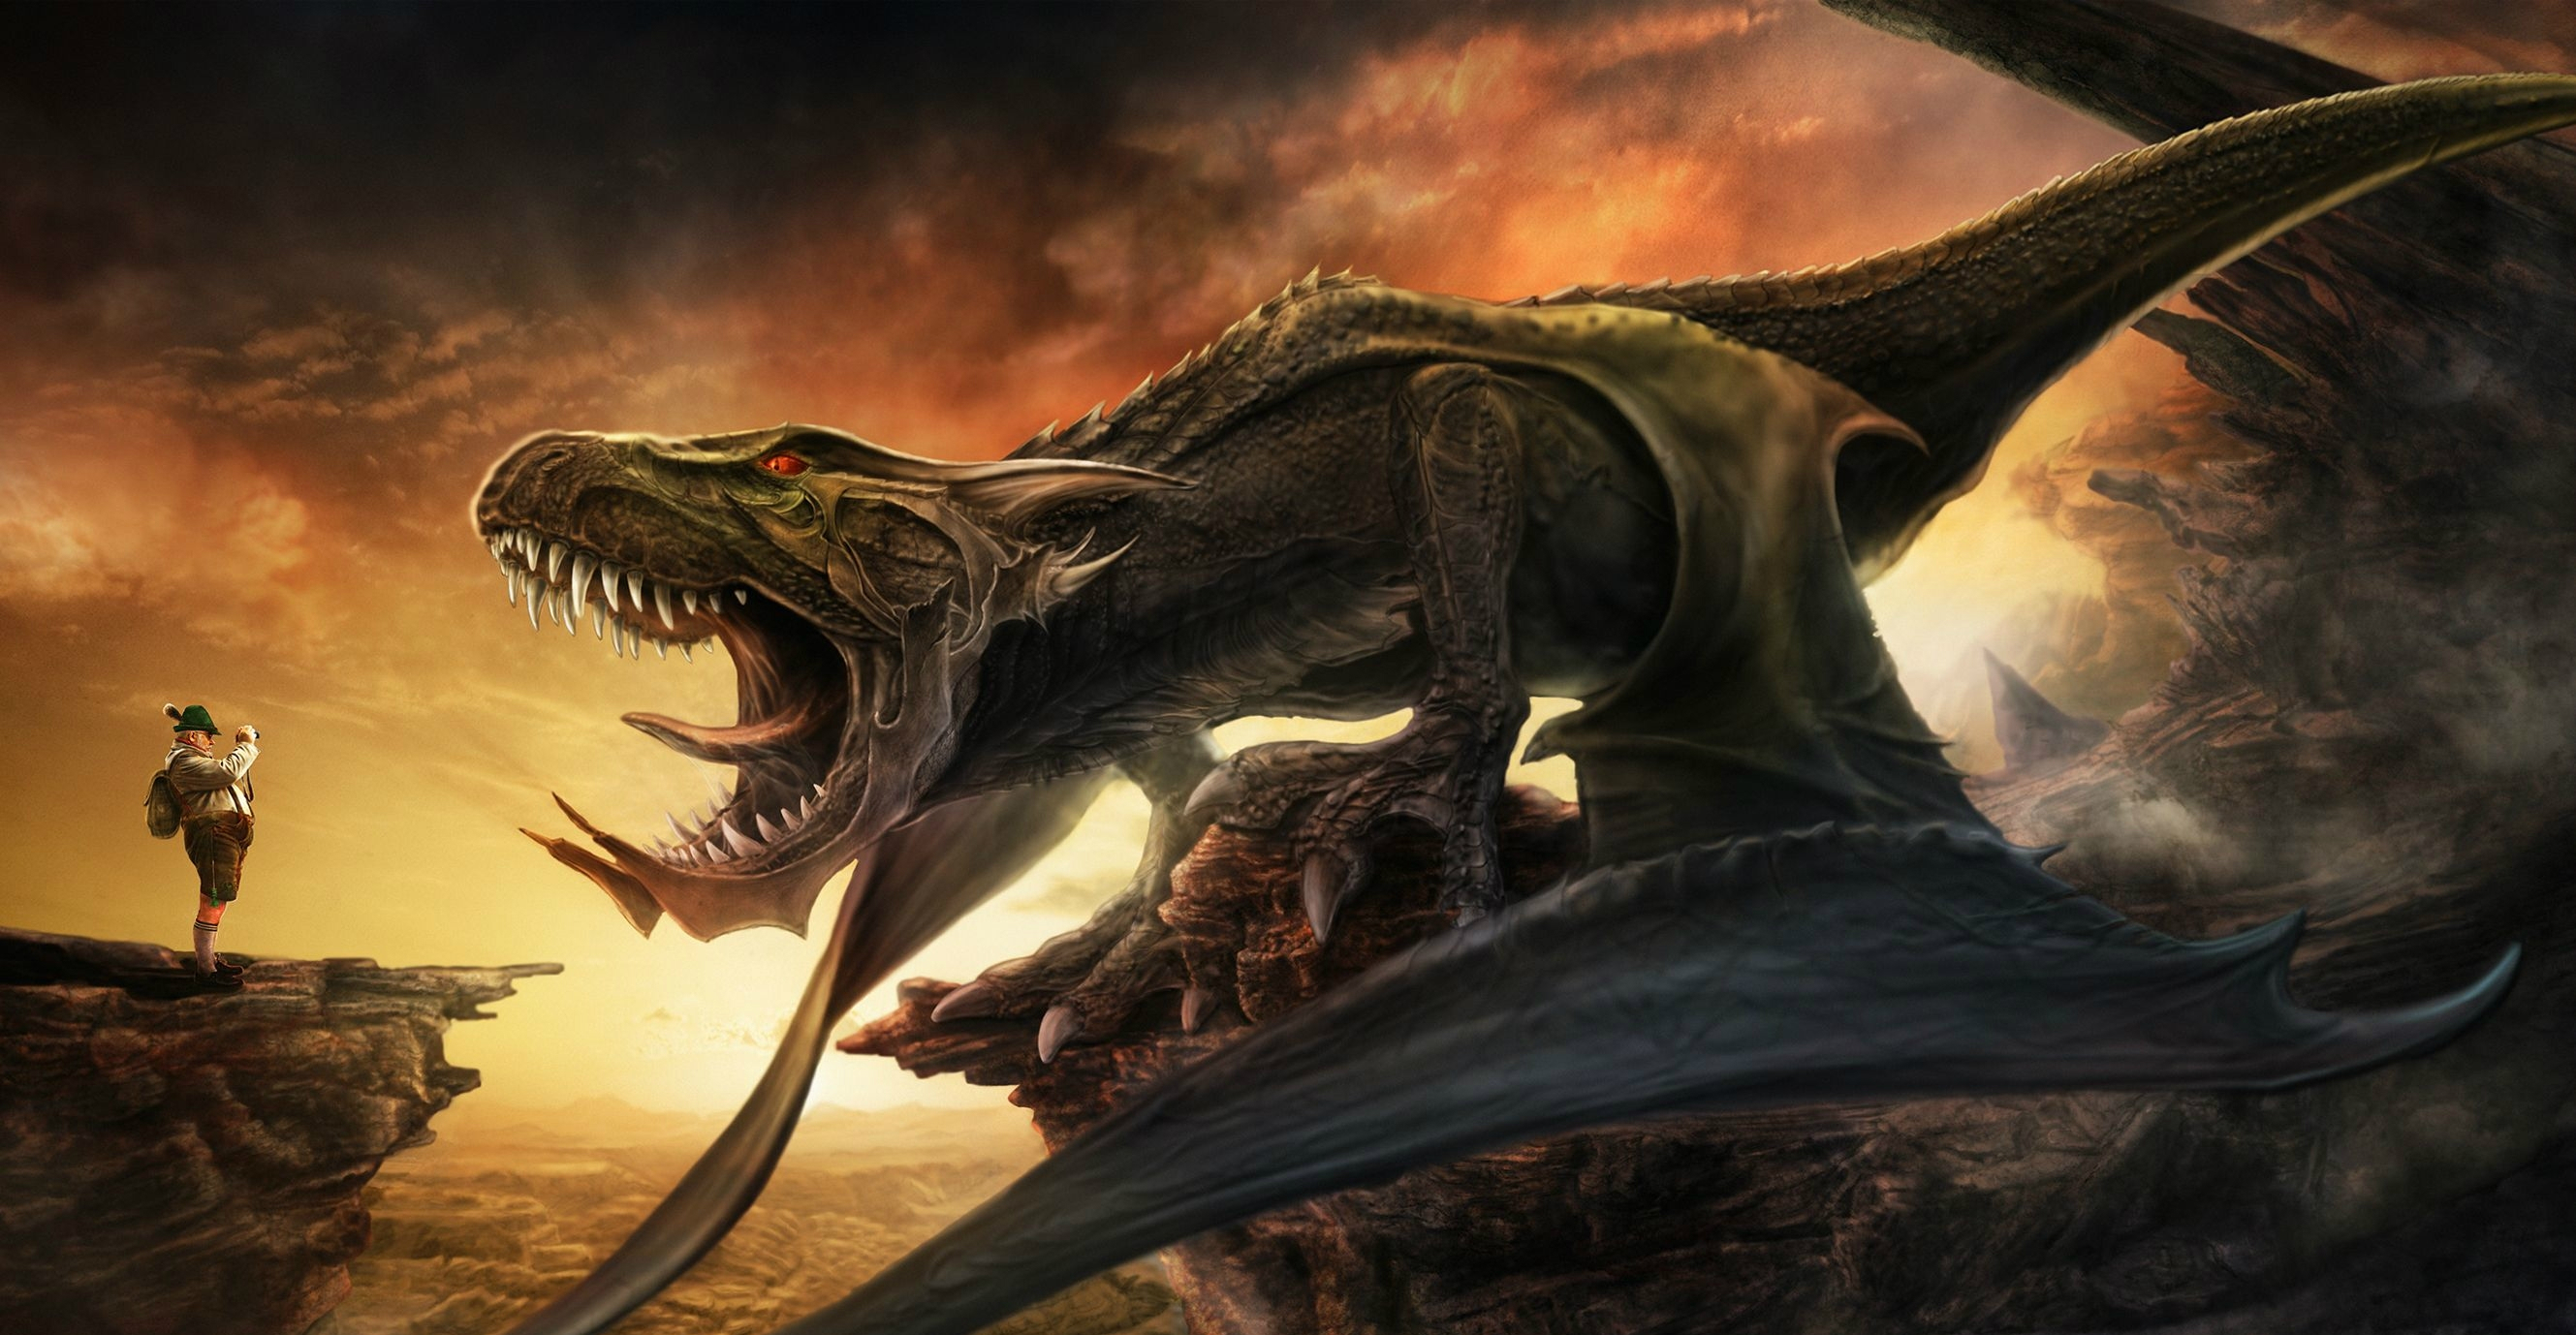 Majestic dragon, resembling a fearsome dinosaur, graces this captivating desktop wallpaper.